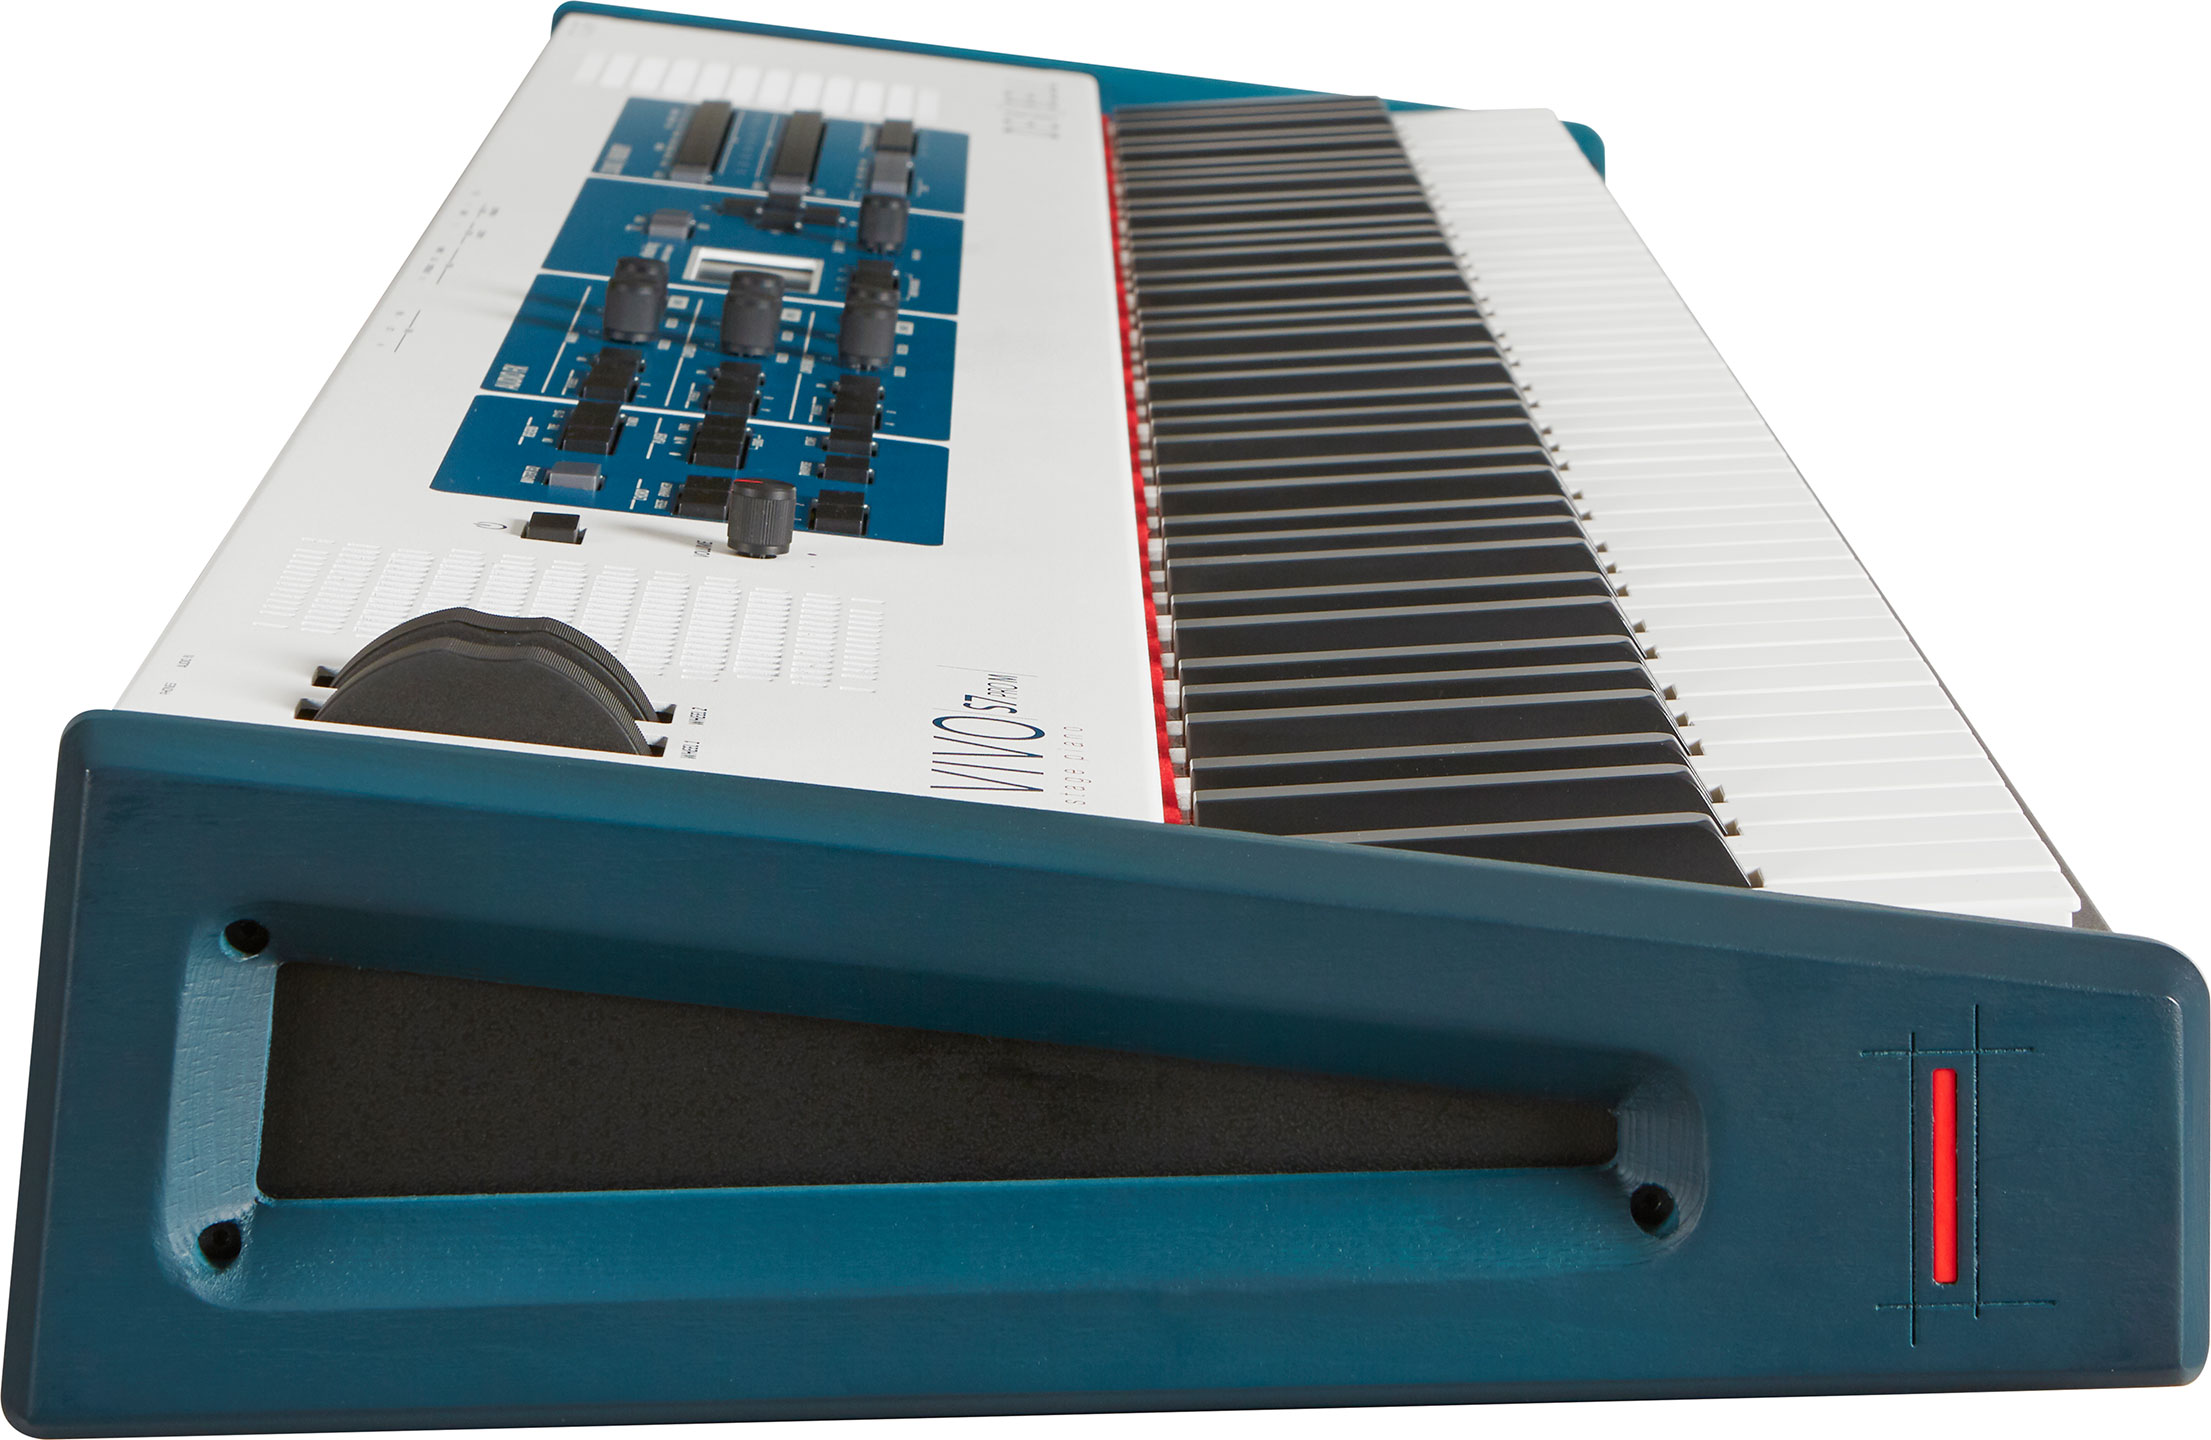 Dexibell Vivo S7 Prom - Stage keyboard - Variation 3